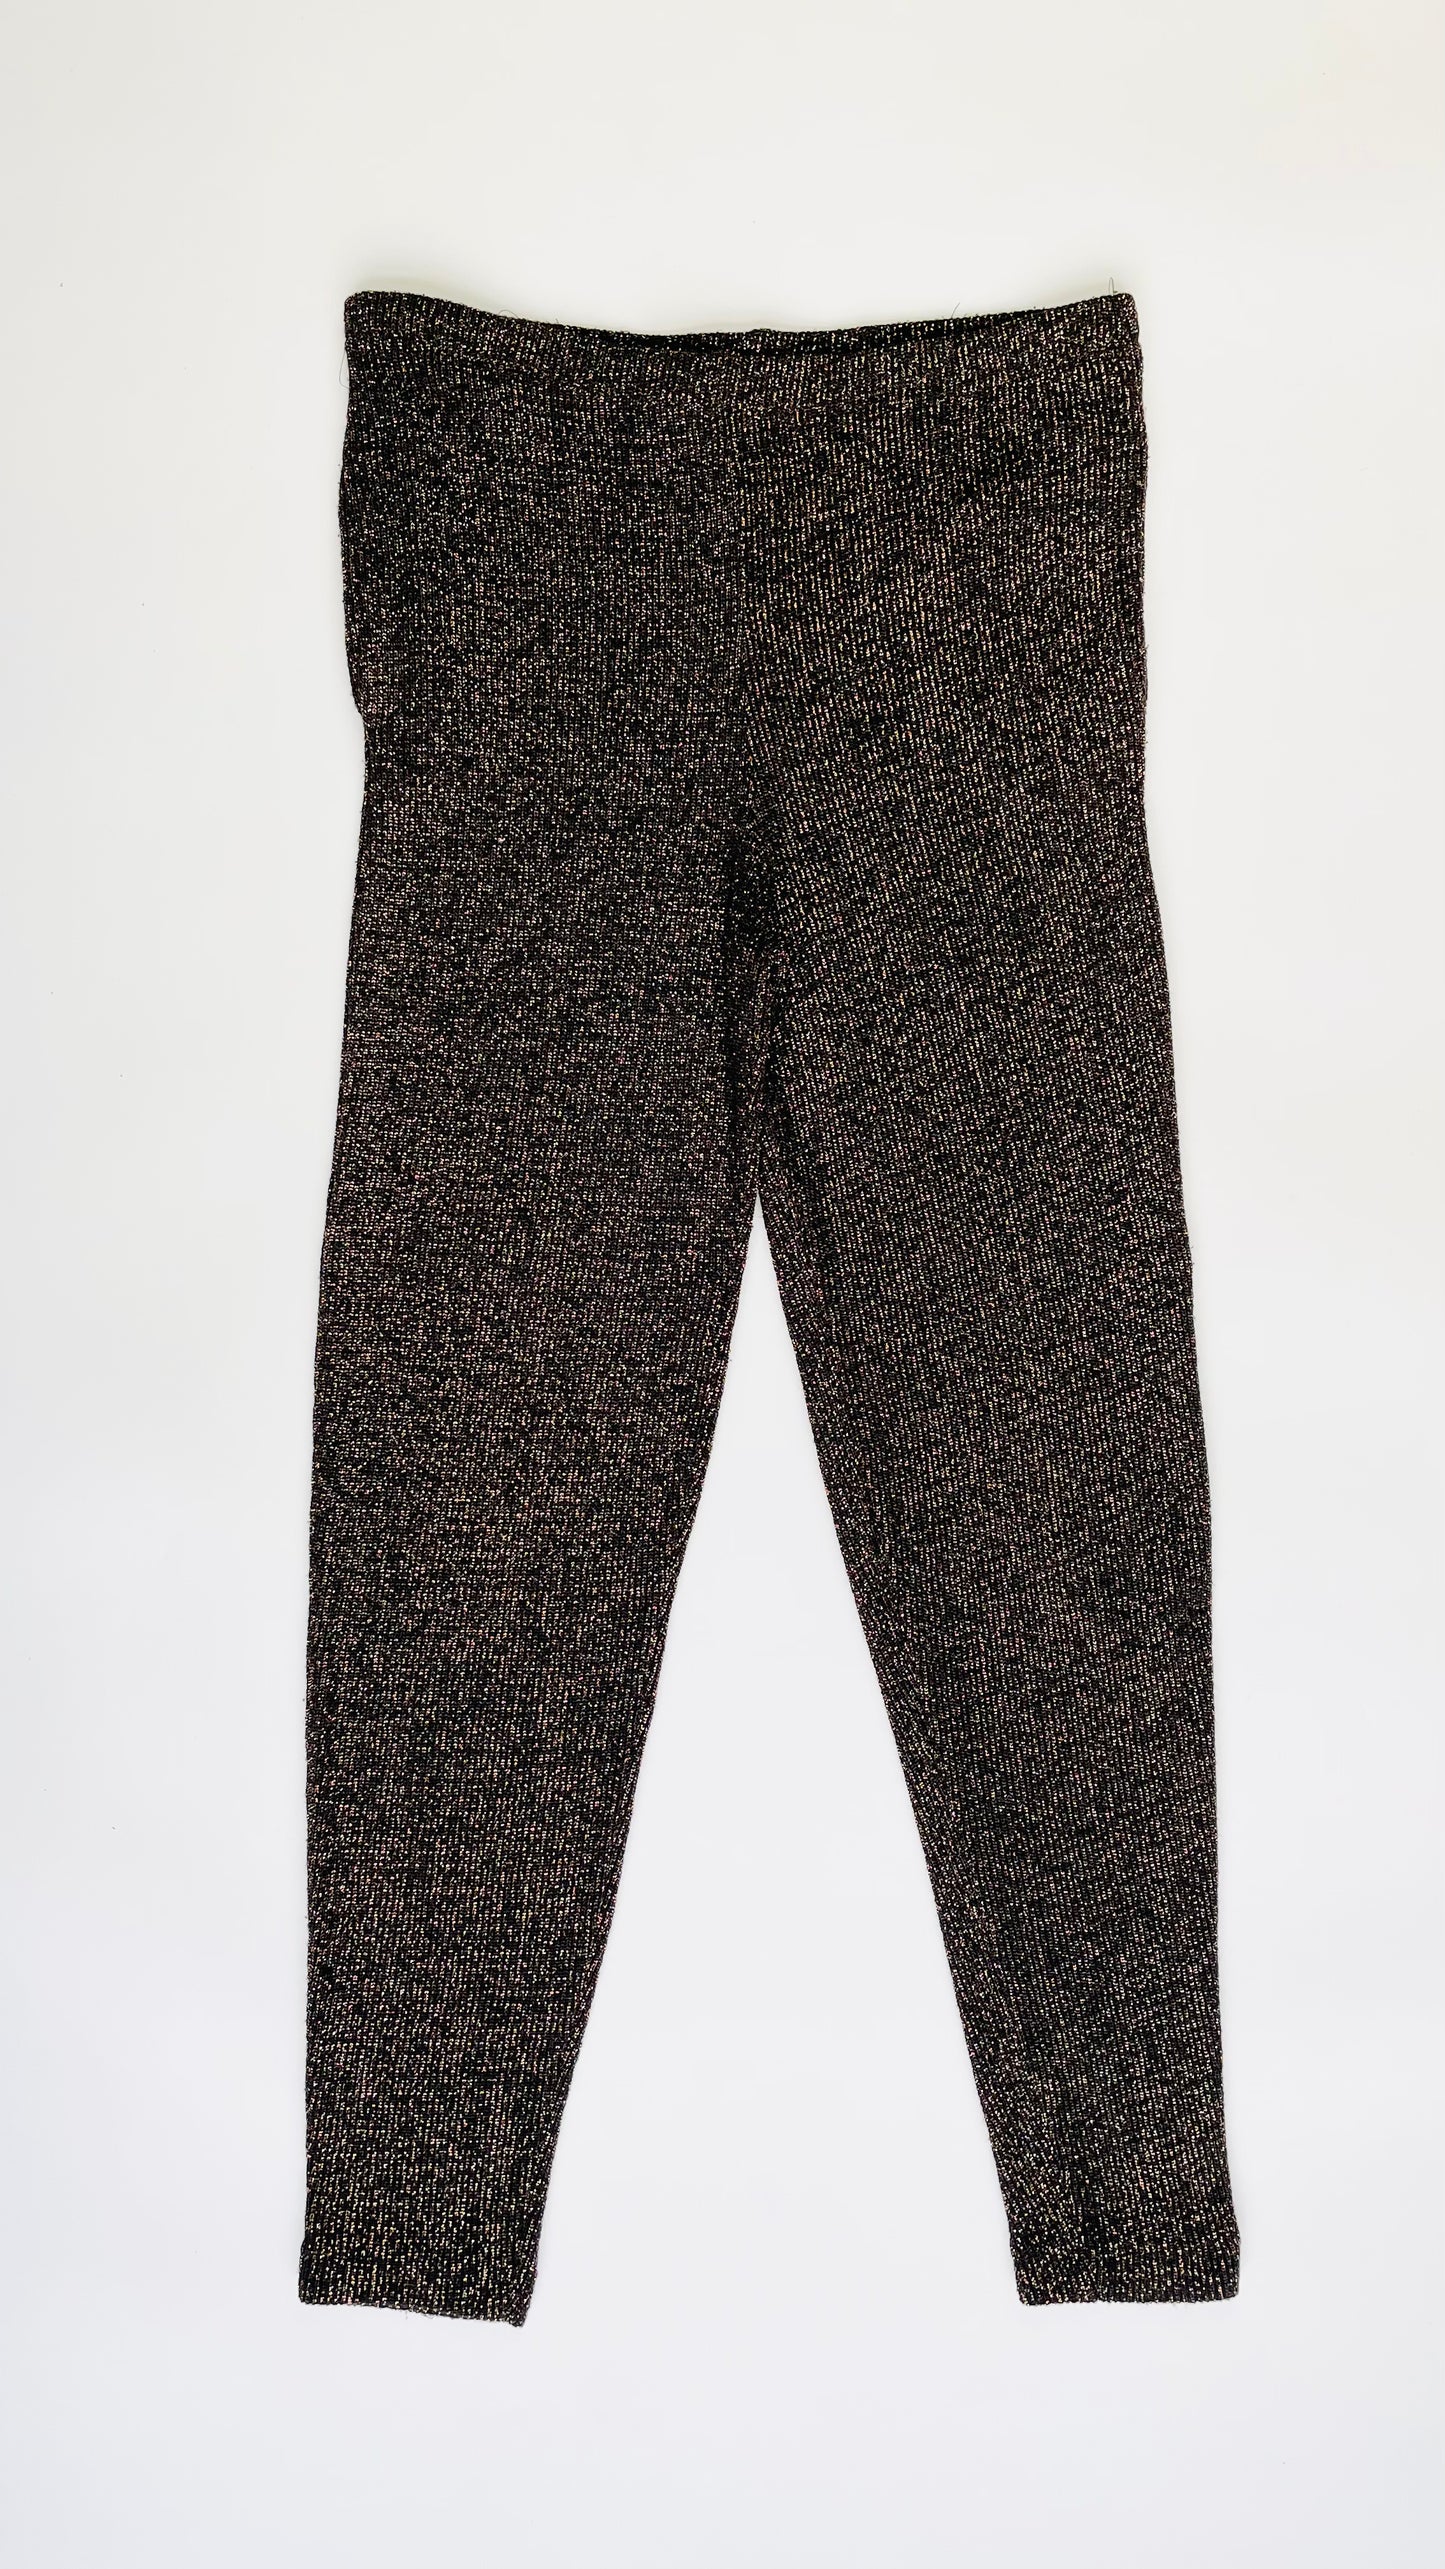 80s metallic copper lurex knit sweater pants - Size L